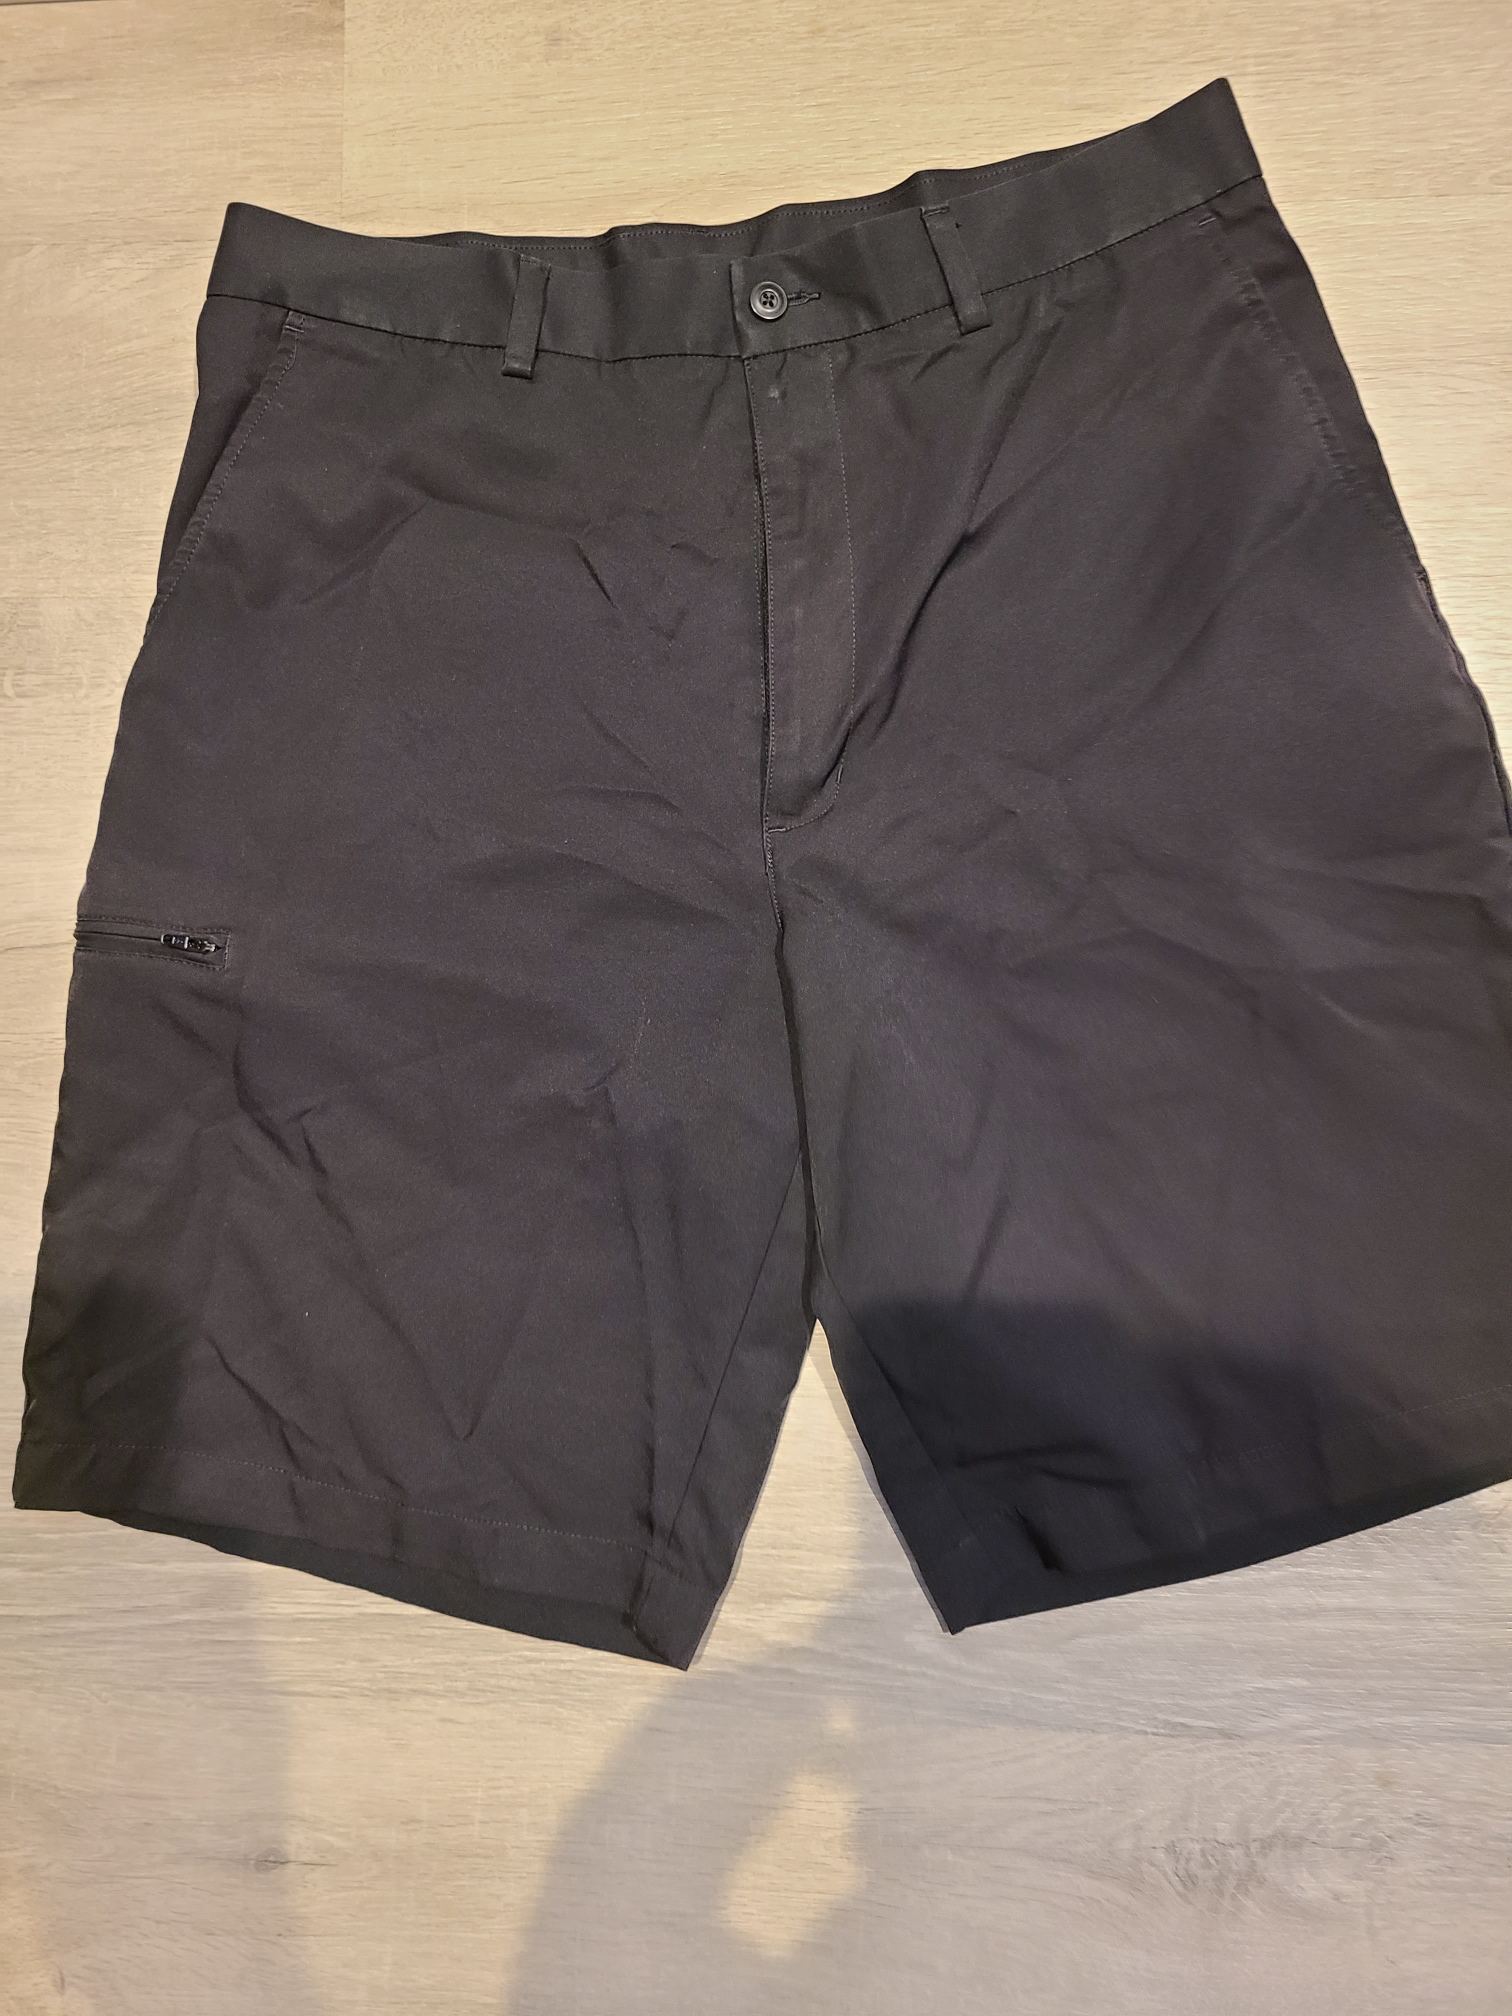 Size 34 Dark Gray/Black New Large Shorts